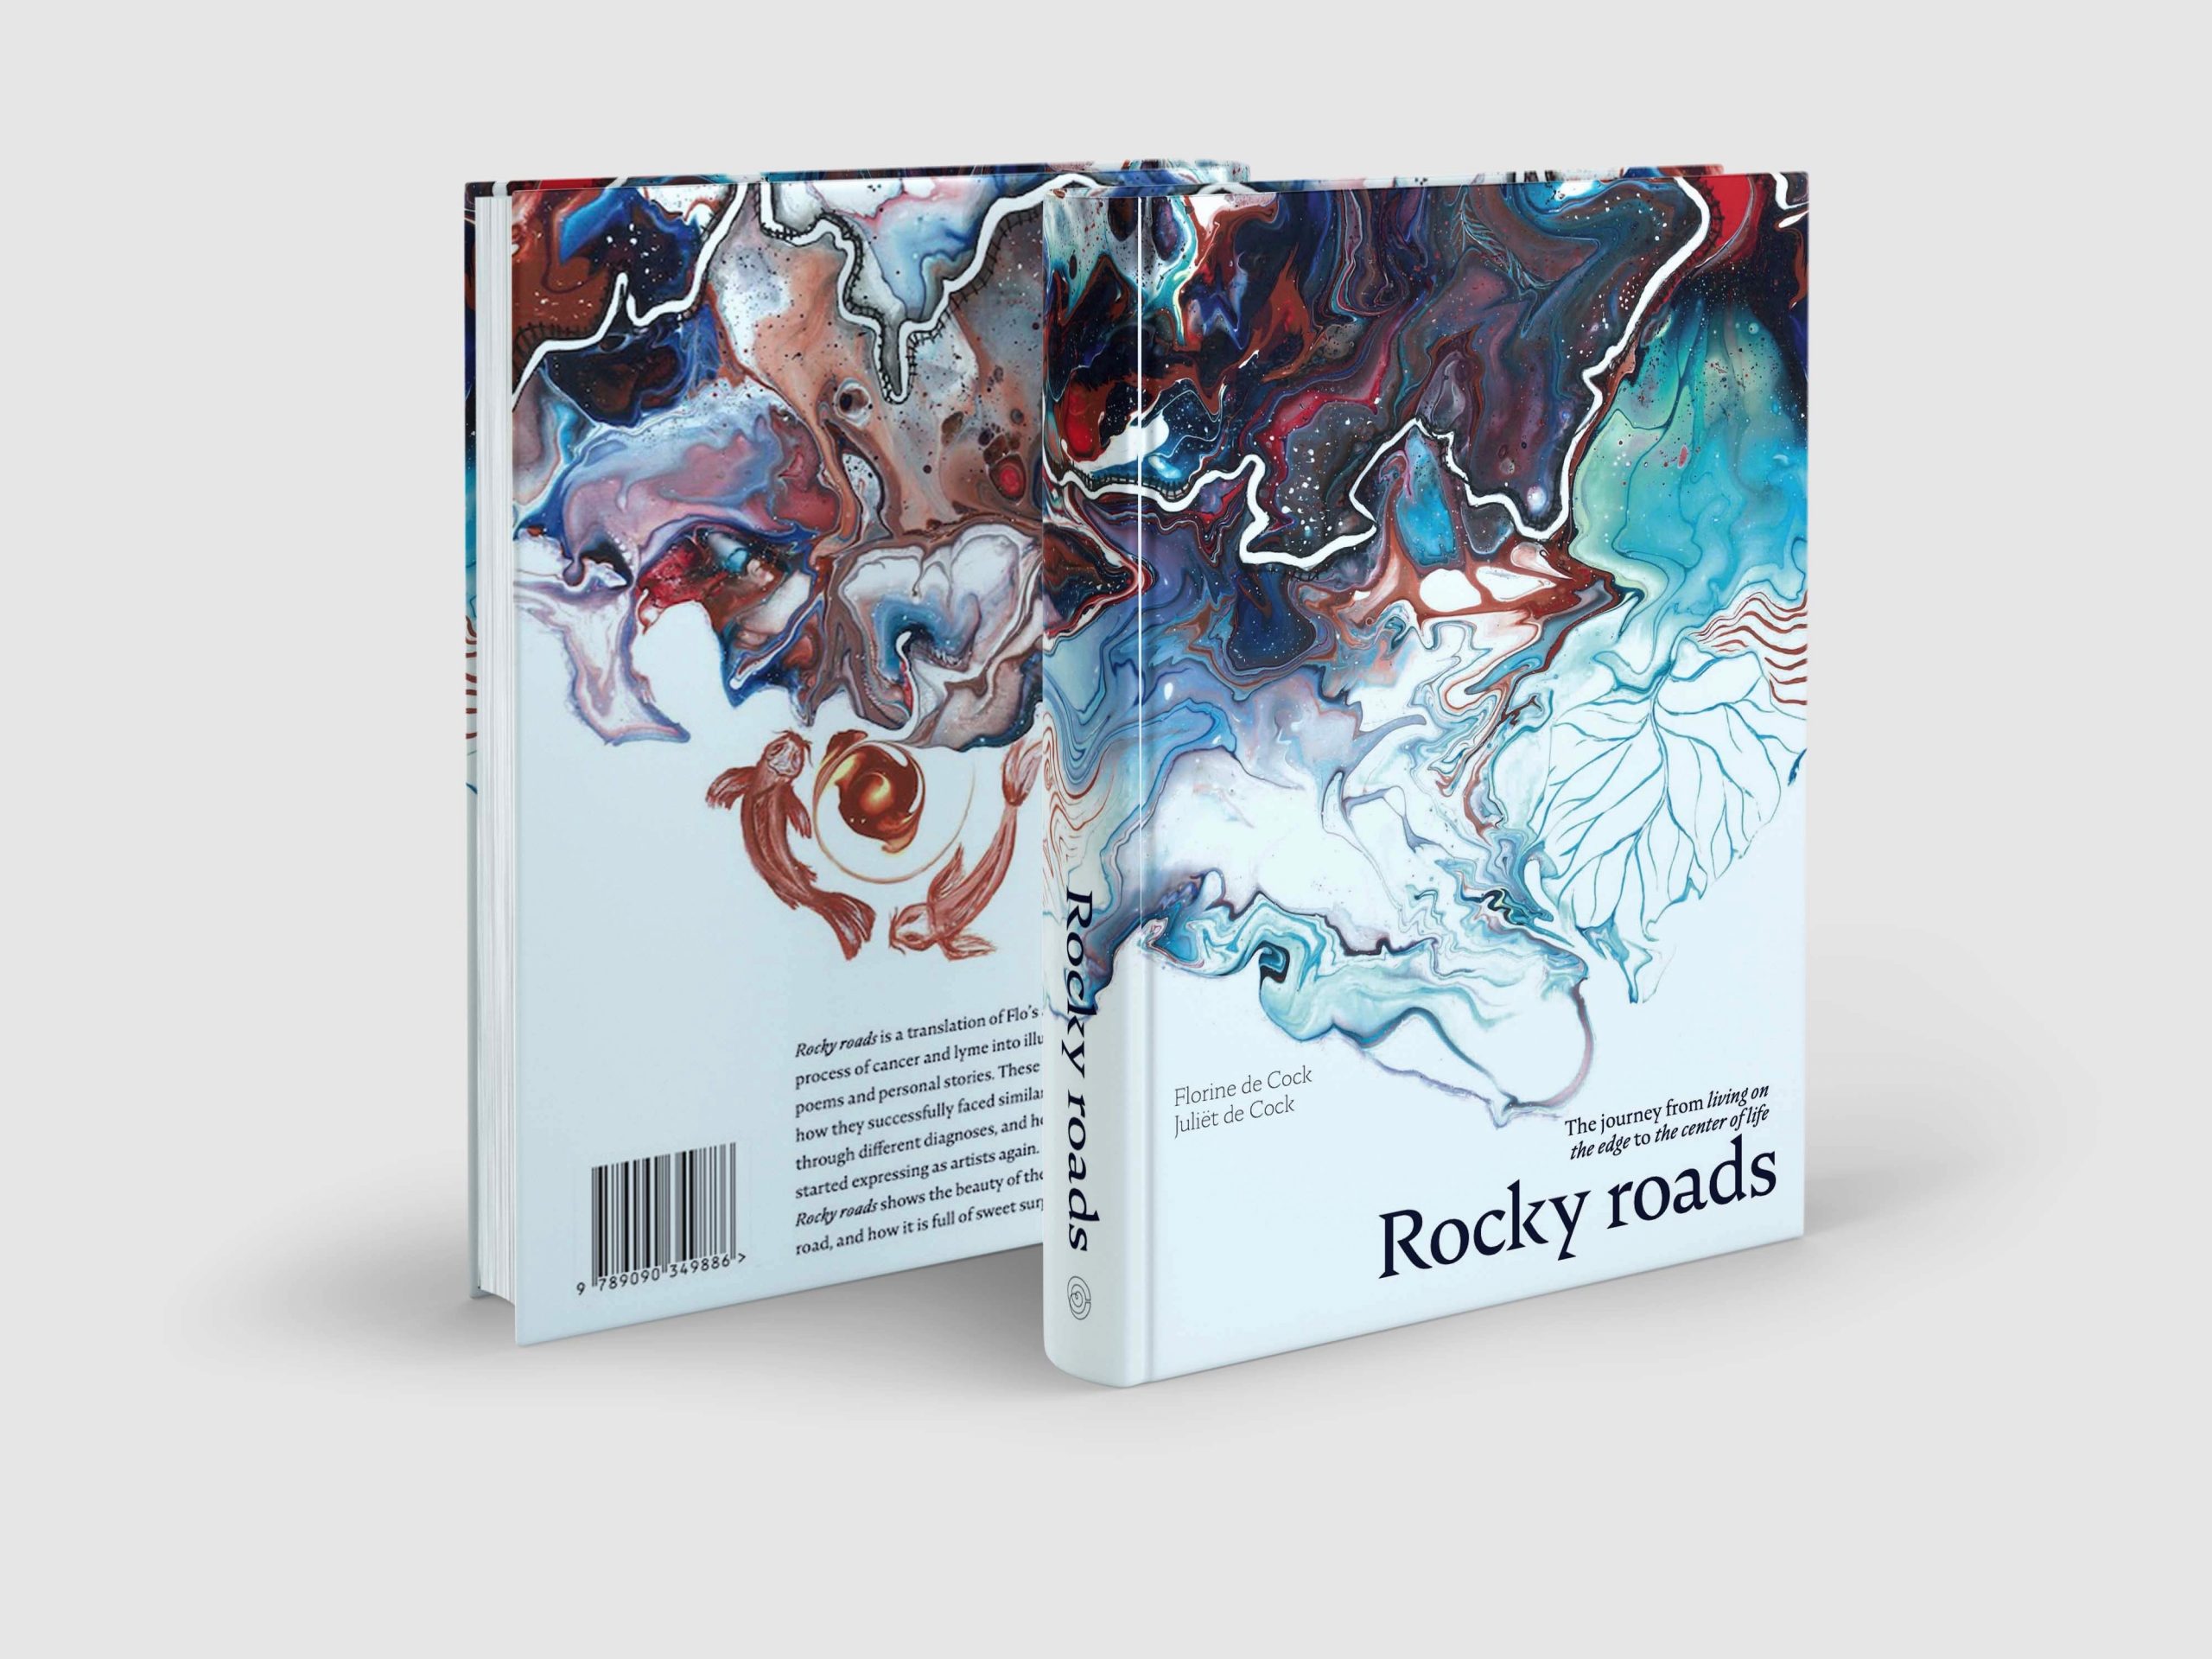 The book – Rocky roads